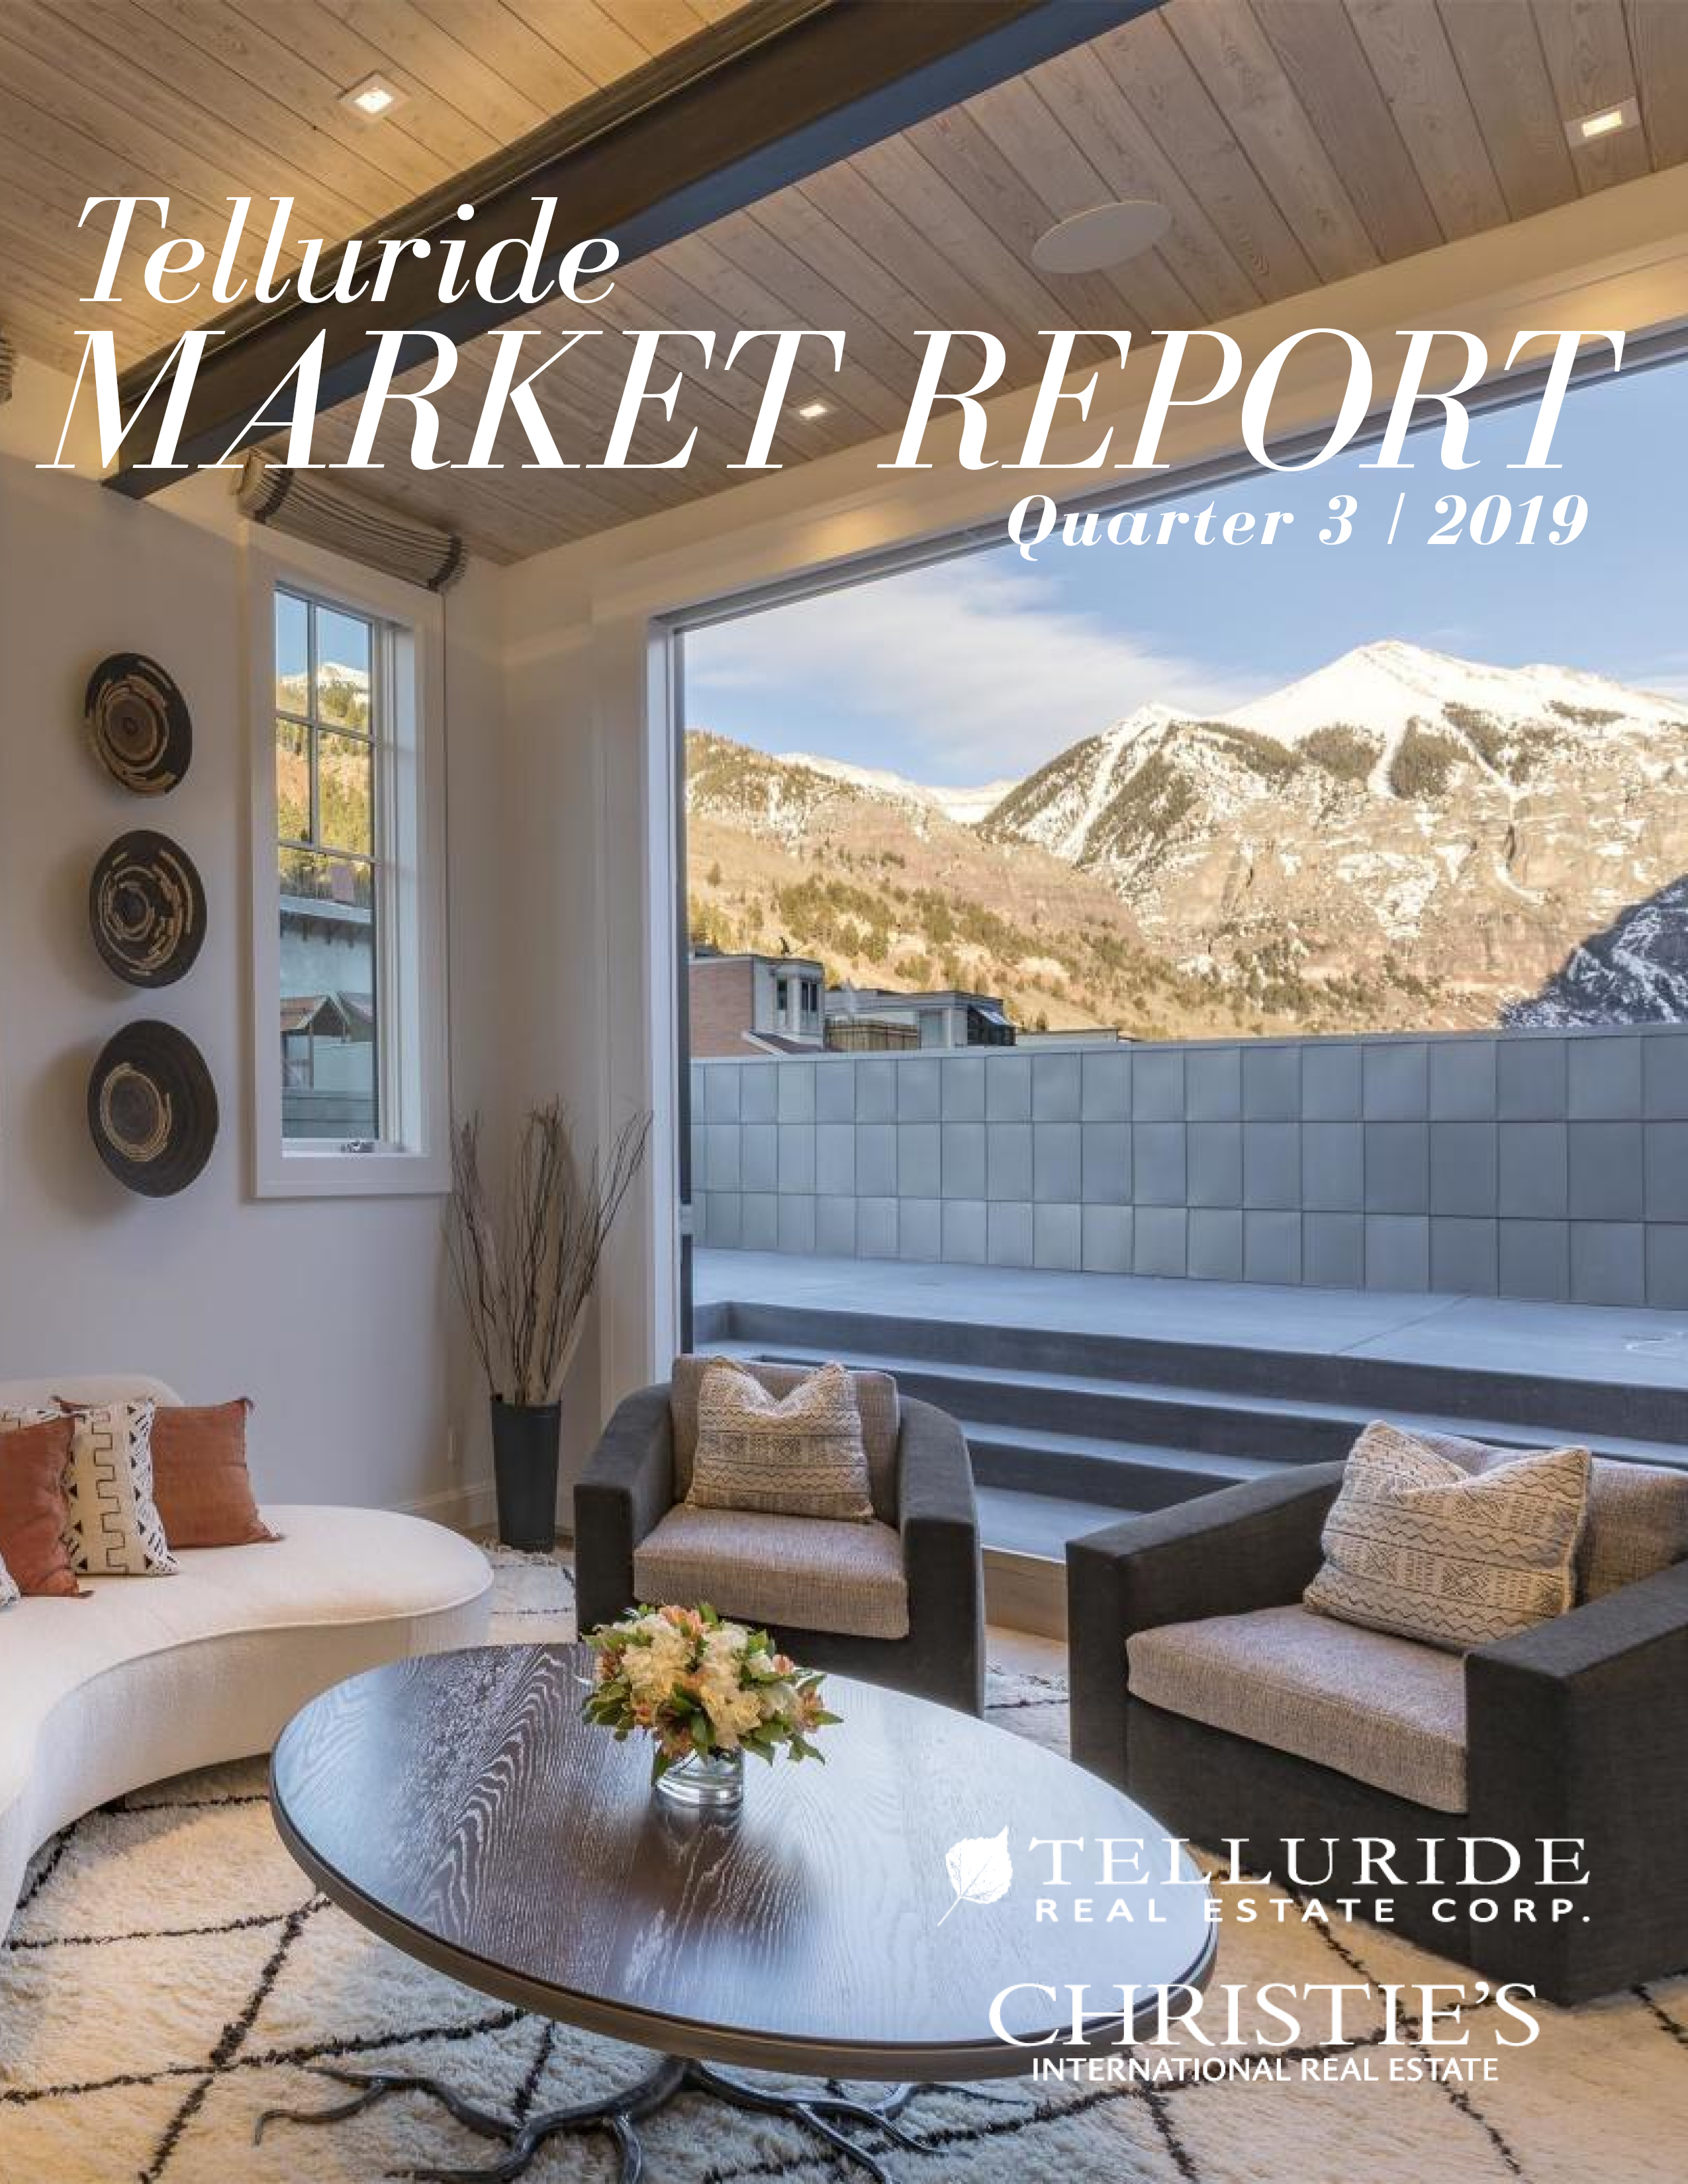 A Strong Summer Sales Season improves Telluride Real Estate Market